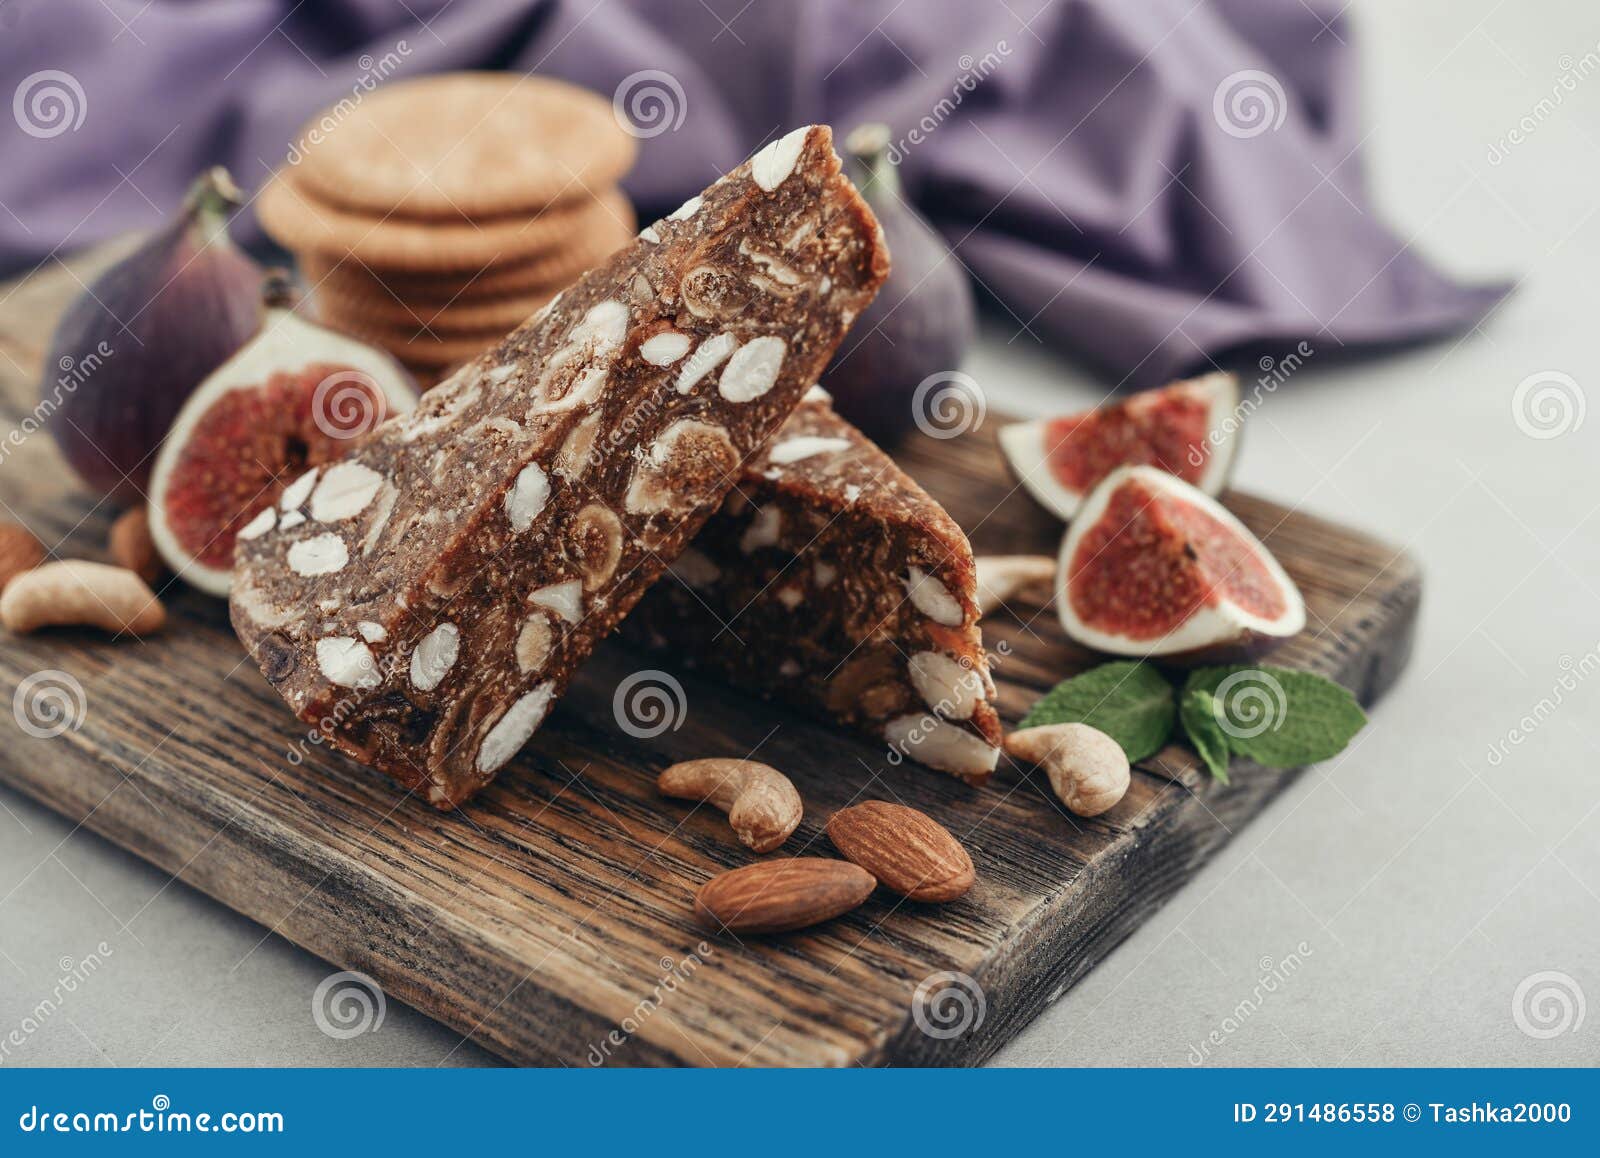 pan de higo - spanish fig bread at wooden cutting board